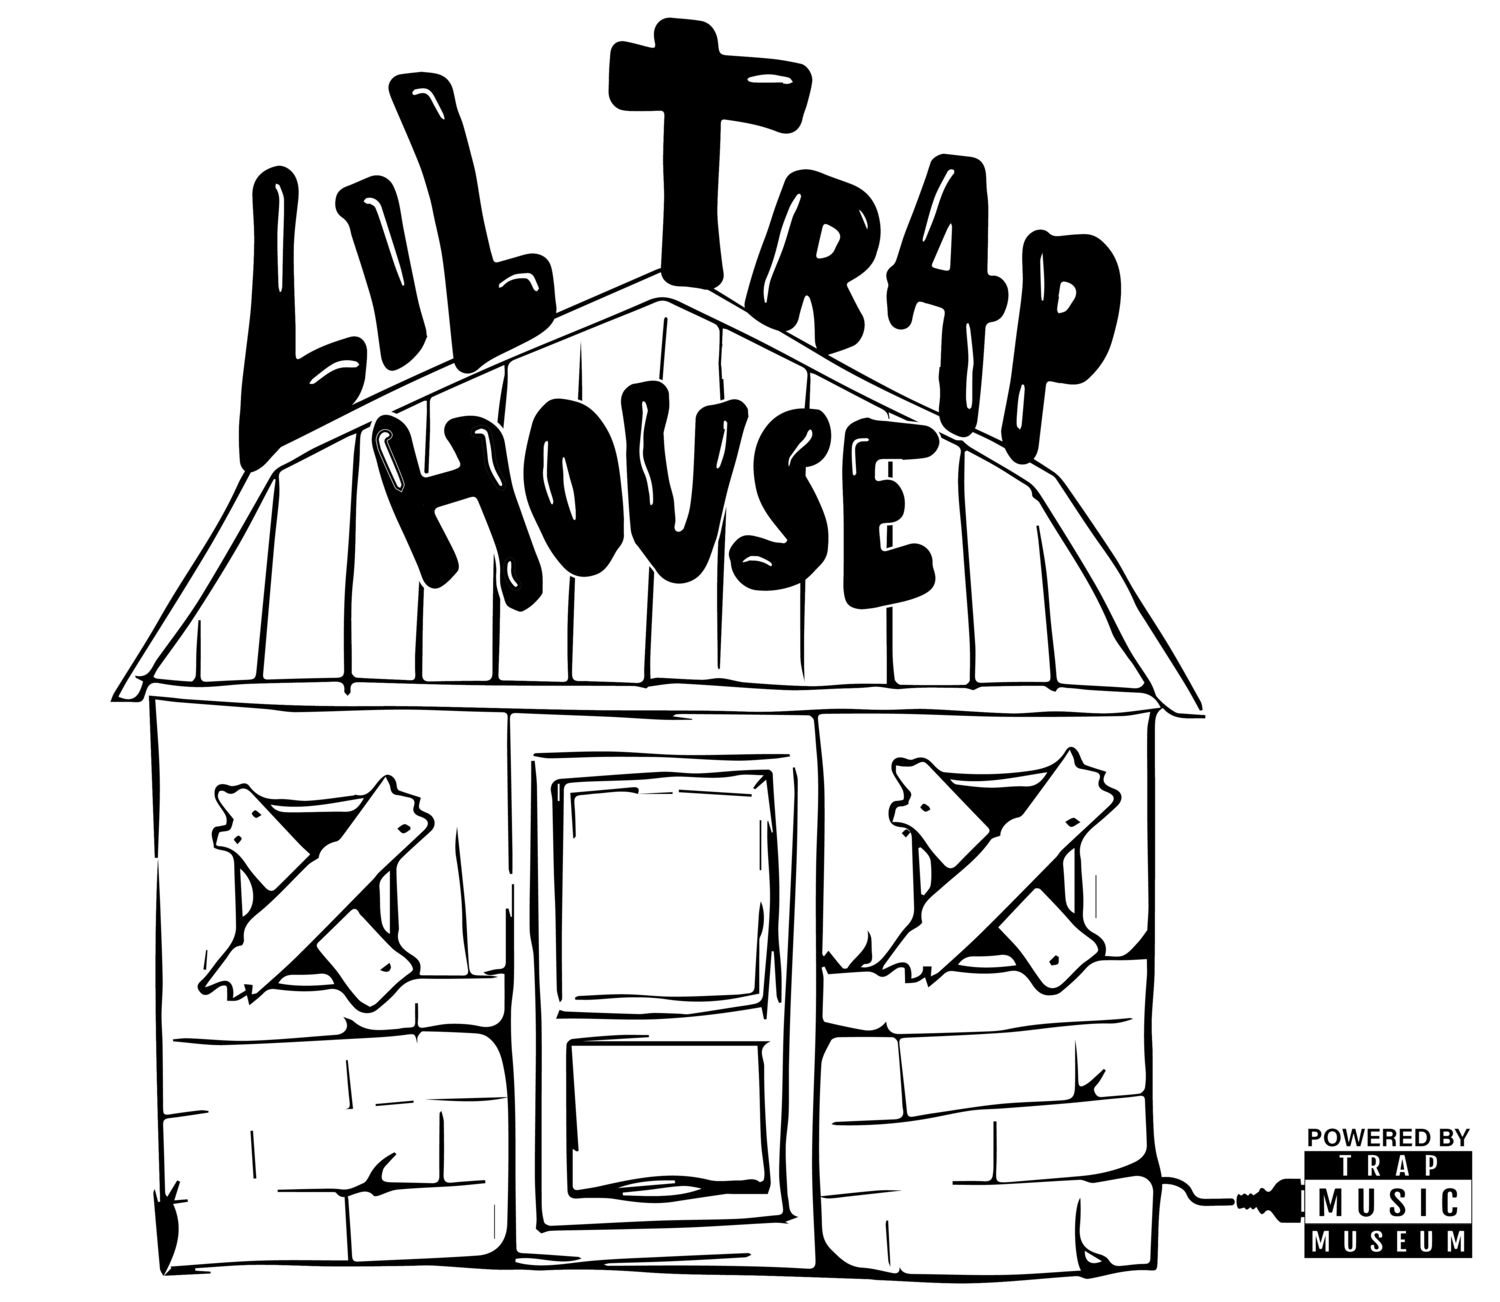 Lil Trap House